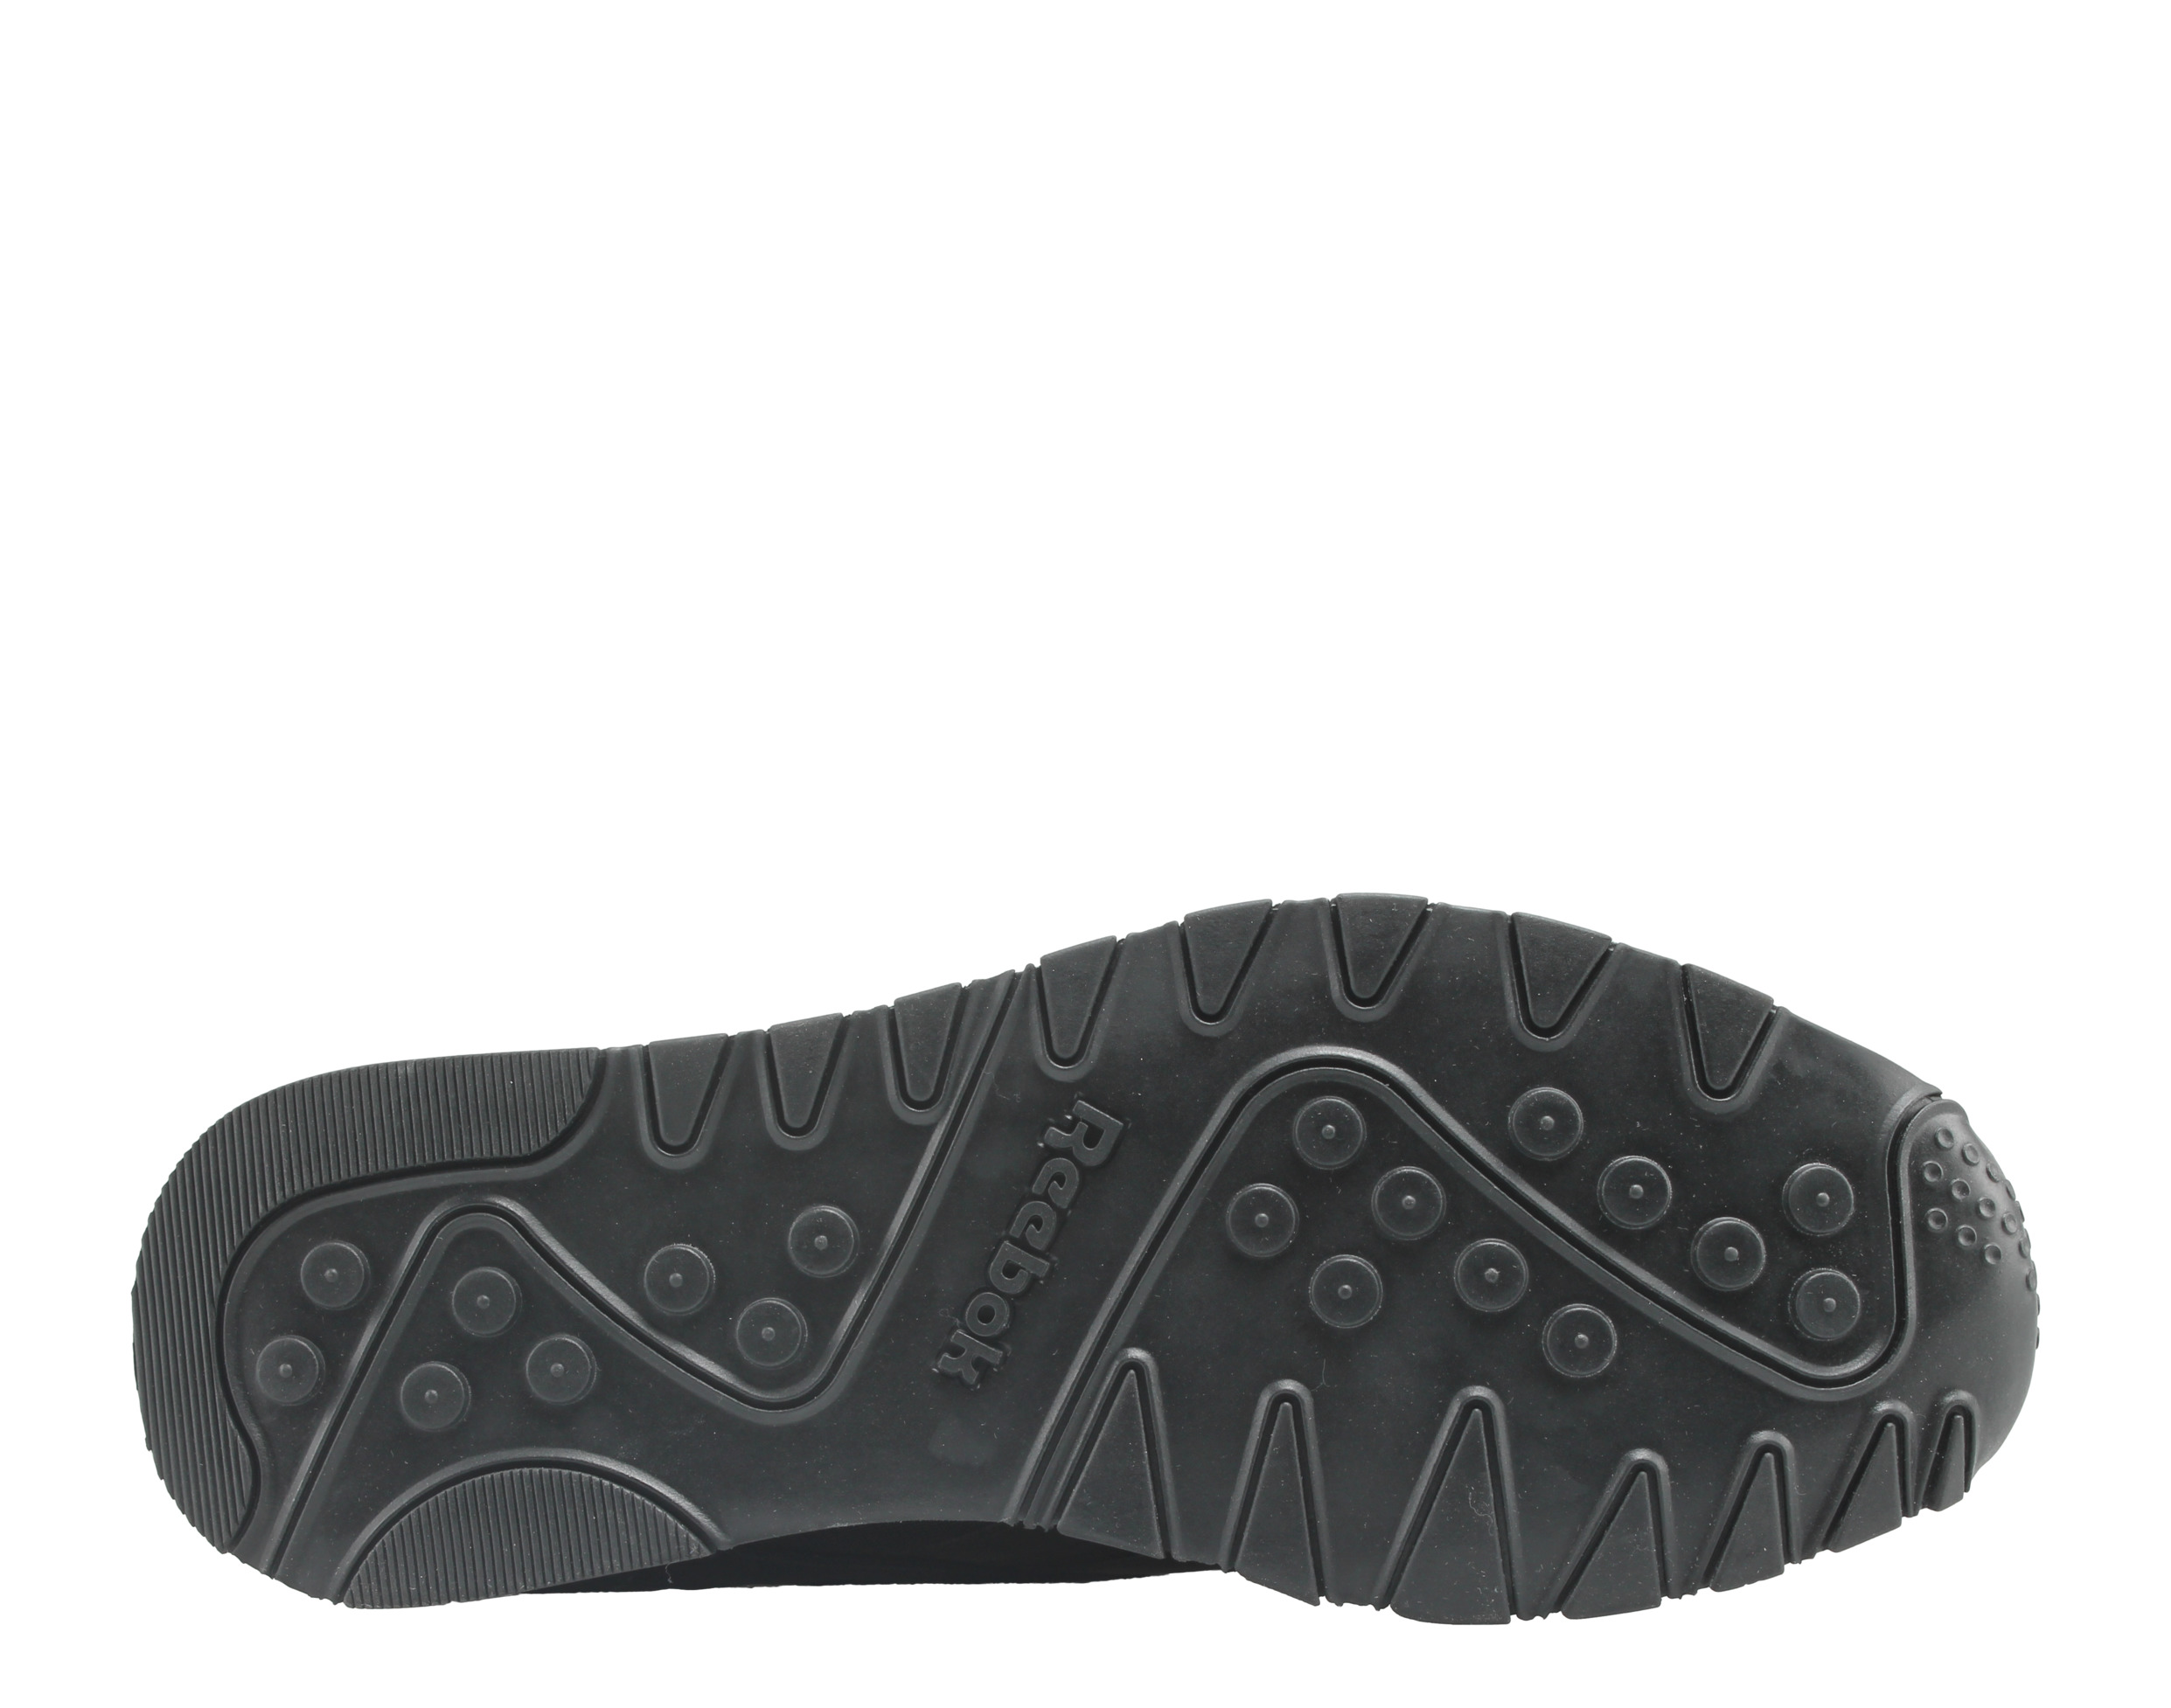 Reebok Classic Nylon Men's Running Shoes Size 9 - image 5 of 6